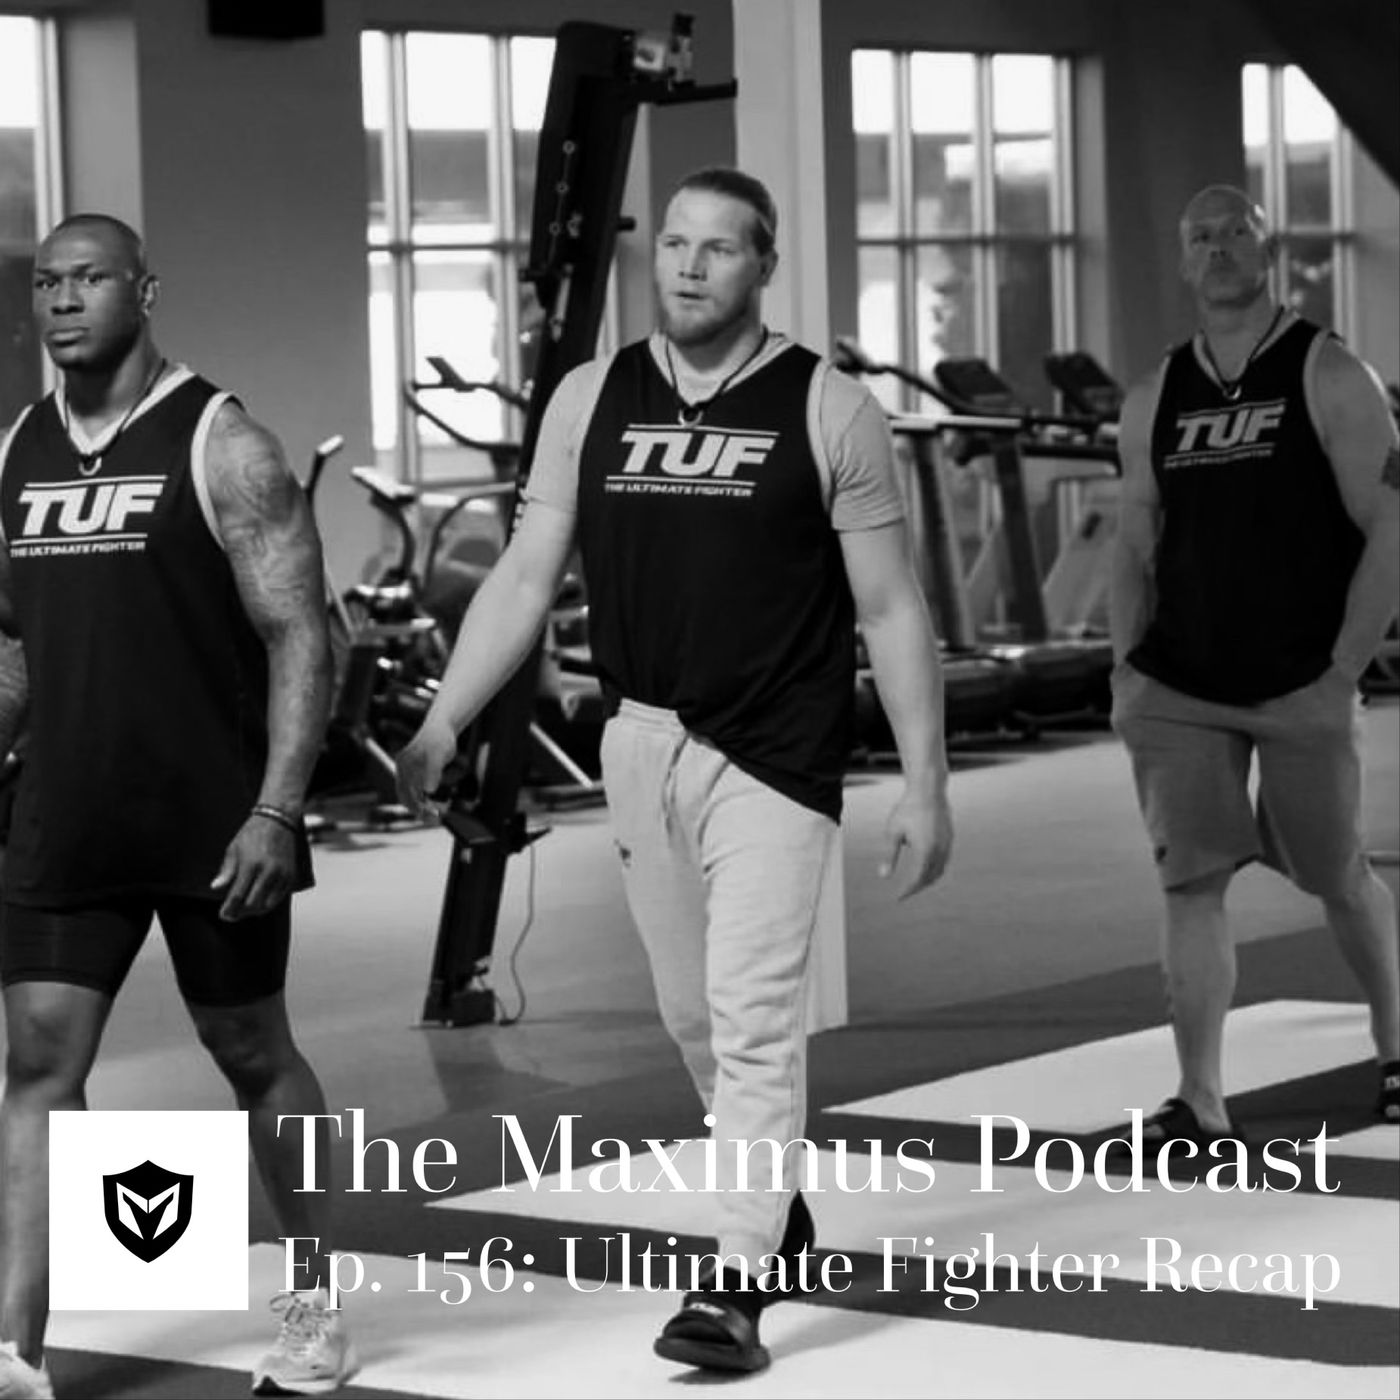 The Maximus Podcast Ep. 156 - Ultimate Fighter Recap